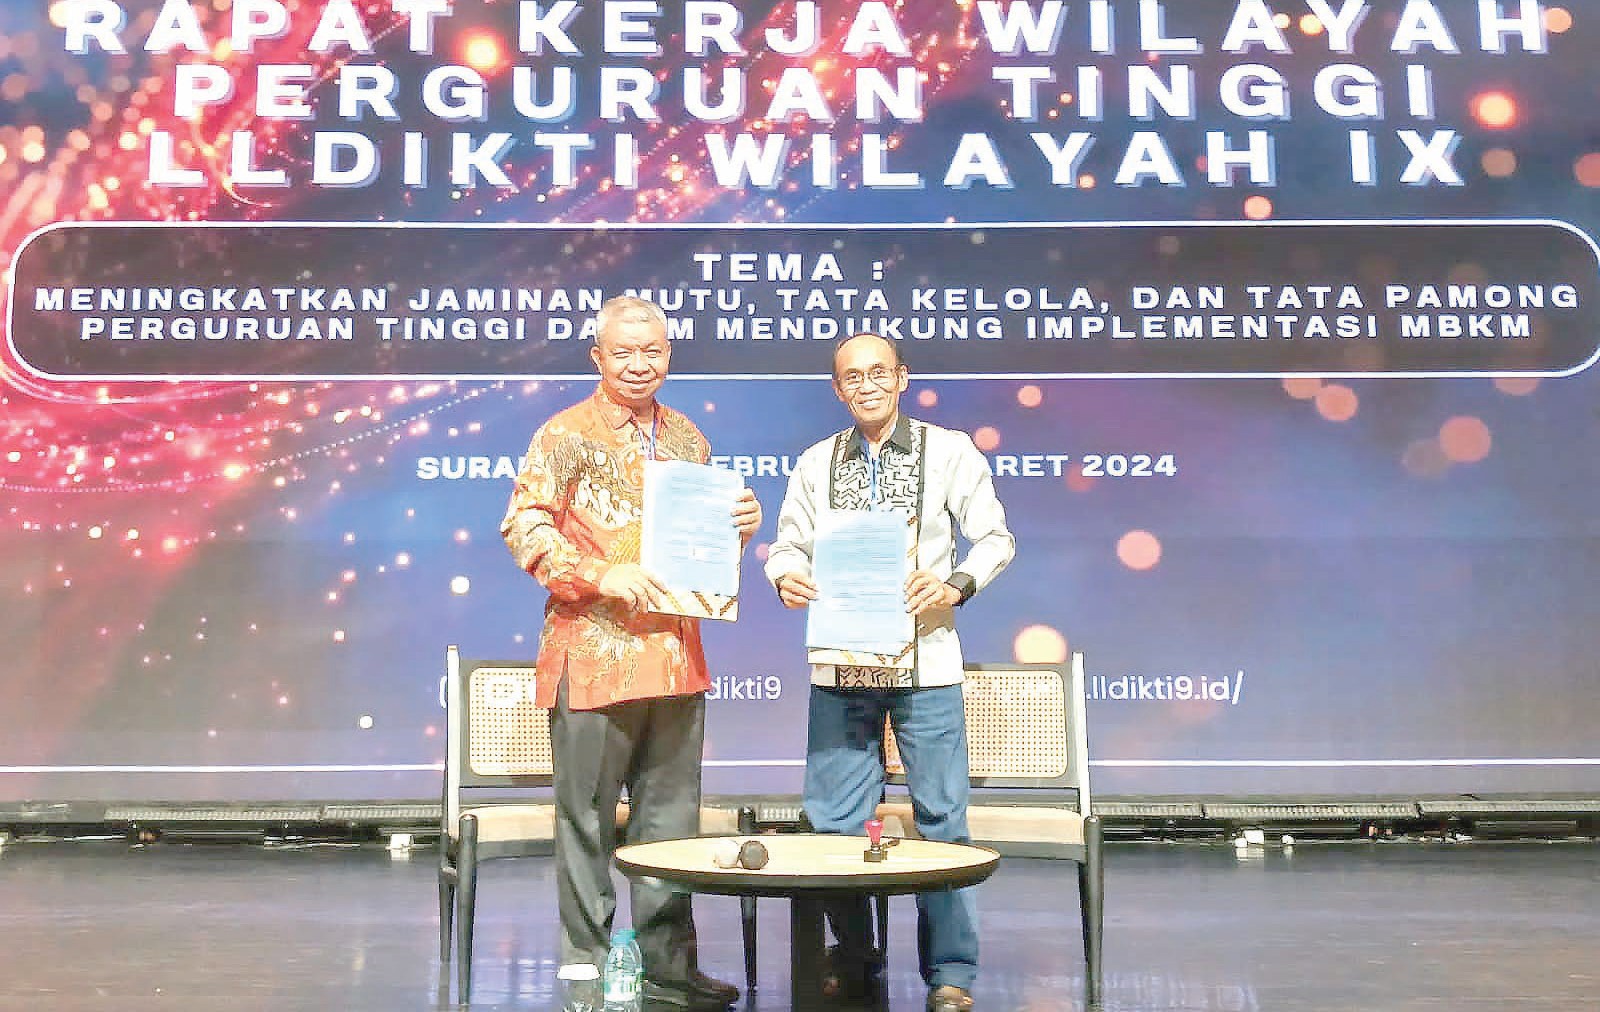 Foto bersama Rektor Universitas Handayani Makassar (UHM) Dr. Nasrullah, S.Kom, M.Si (kanan) dan Universitas Sulawesi Tenggara (Unsultra) Prof. Dr. Andi Bahrun, M.Sc., Agric (kiri) usai MoU. (UNSULTRA FOR KENDARI POS)